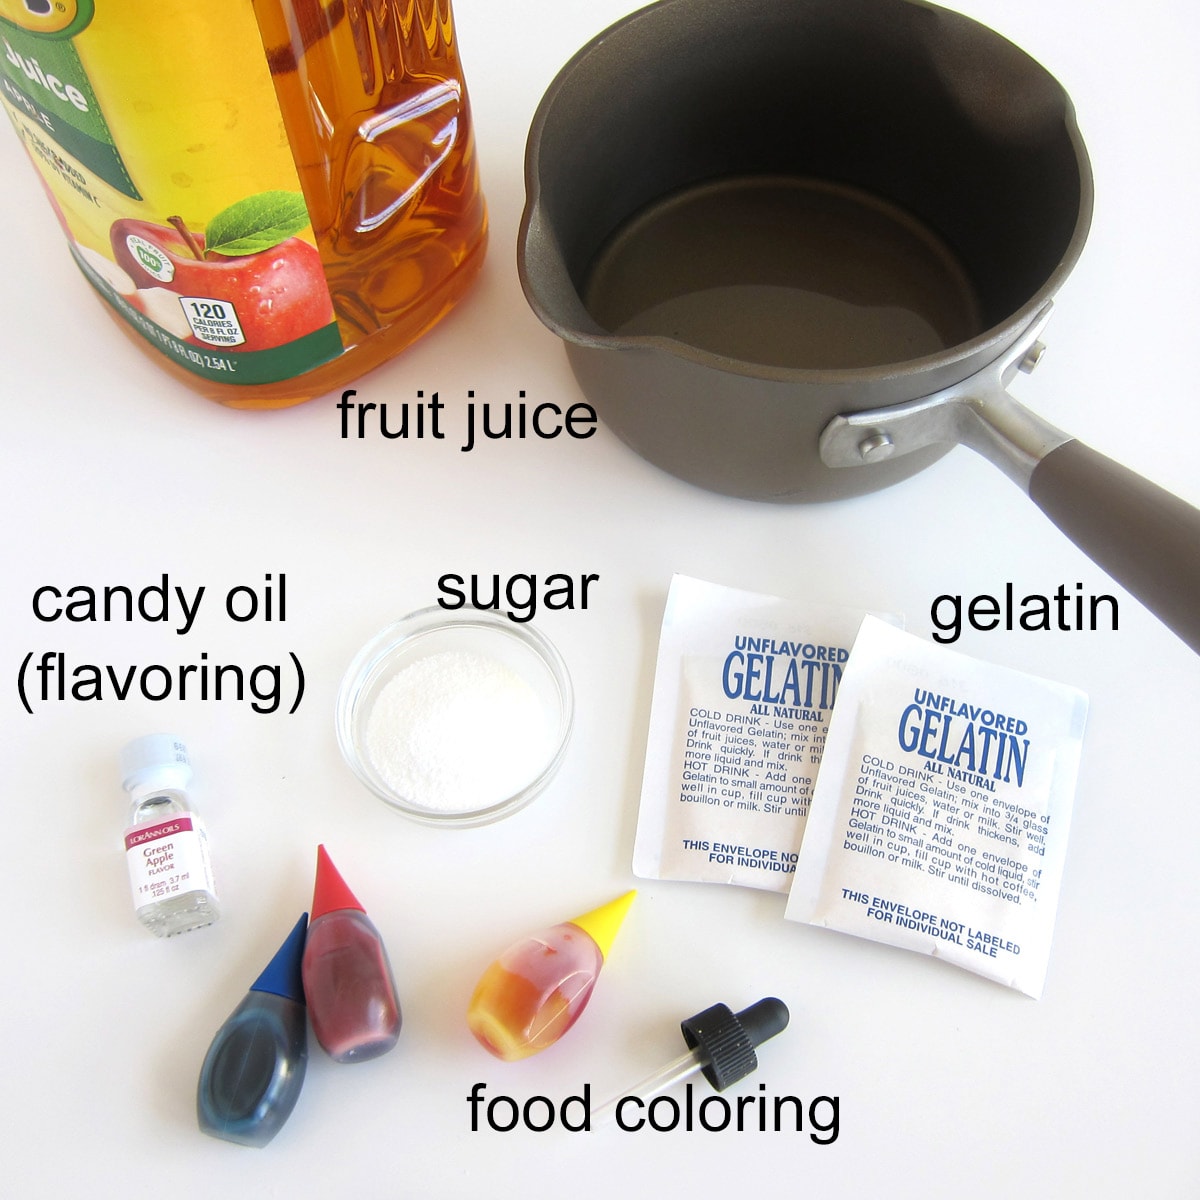 fruit juice gummy bear recipe ingredients including apple juice, sugar, gelatin, candy oil, and food coloring.